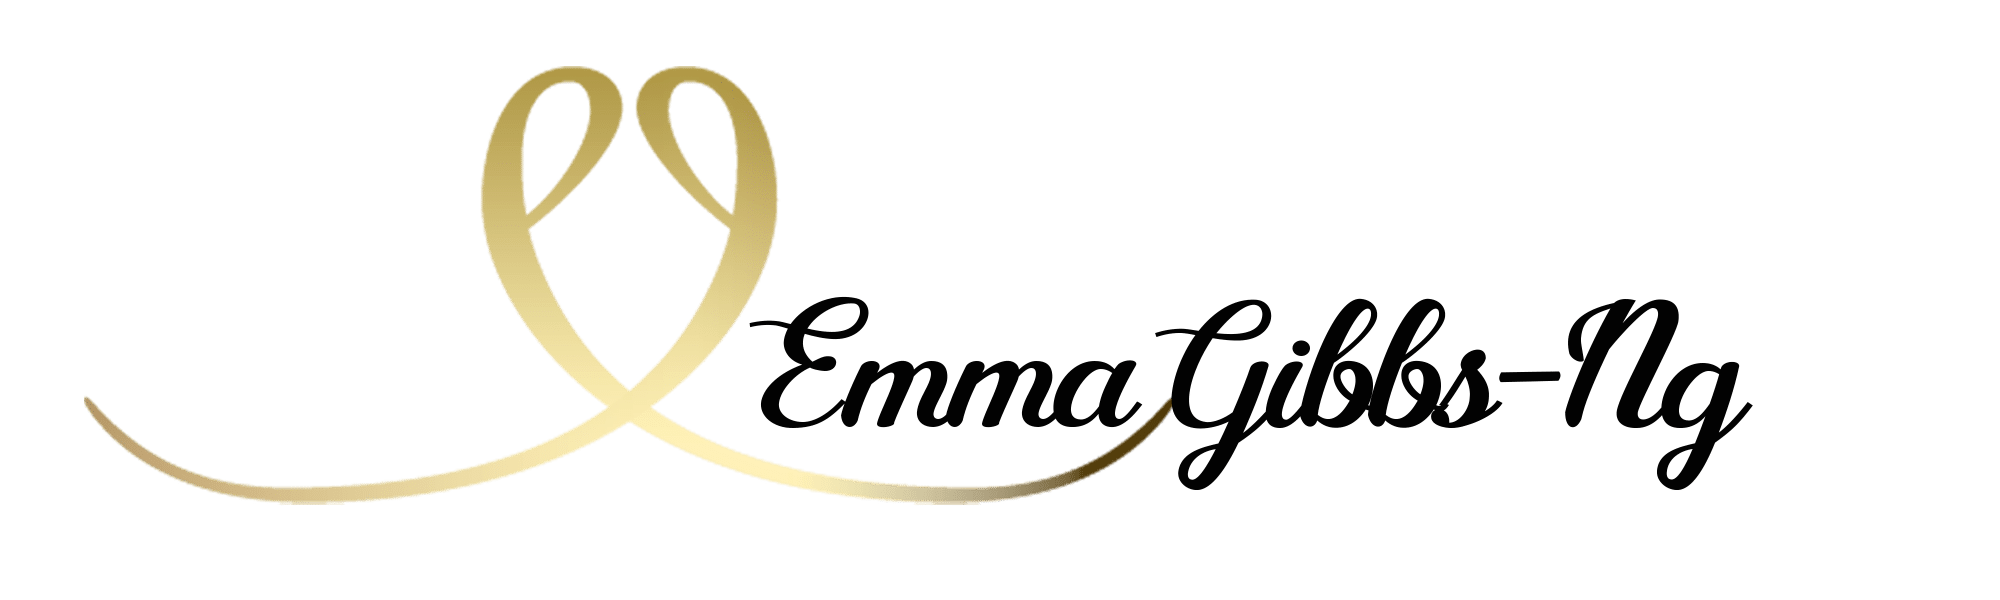 Emma Gibbs